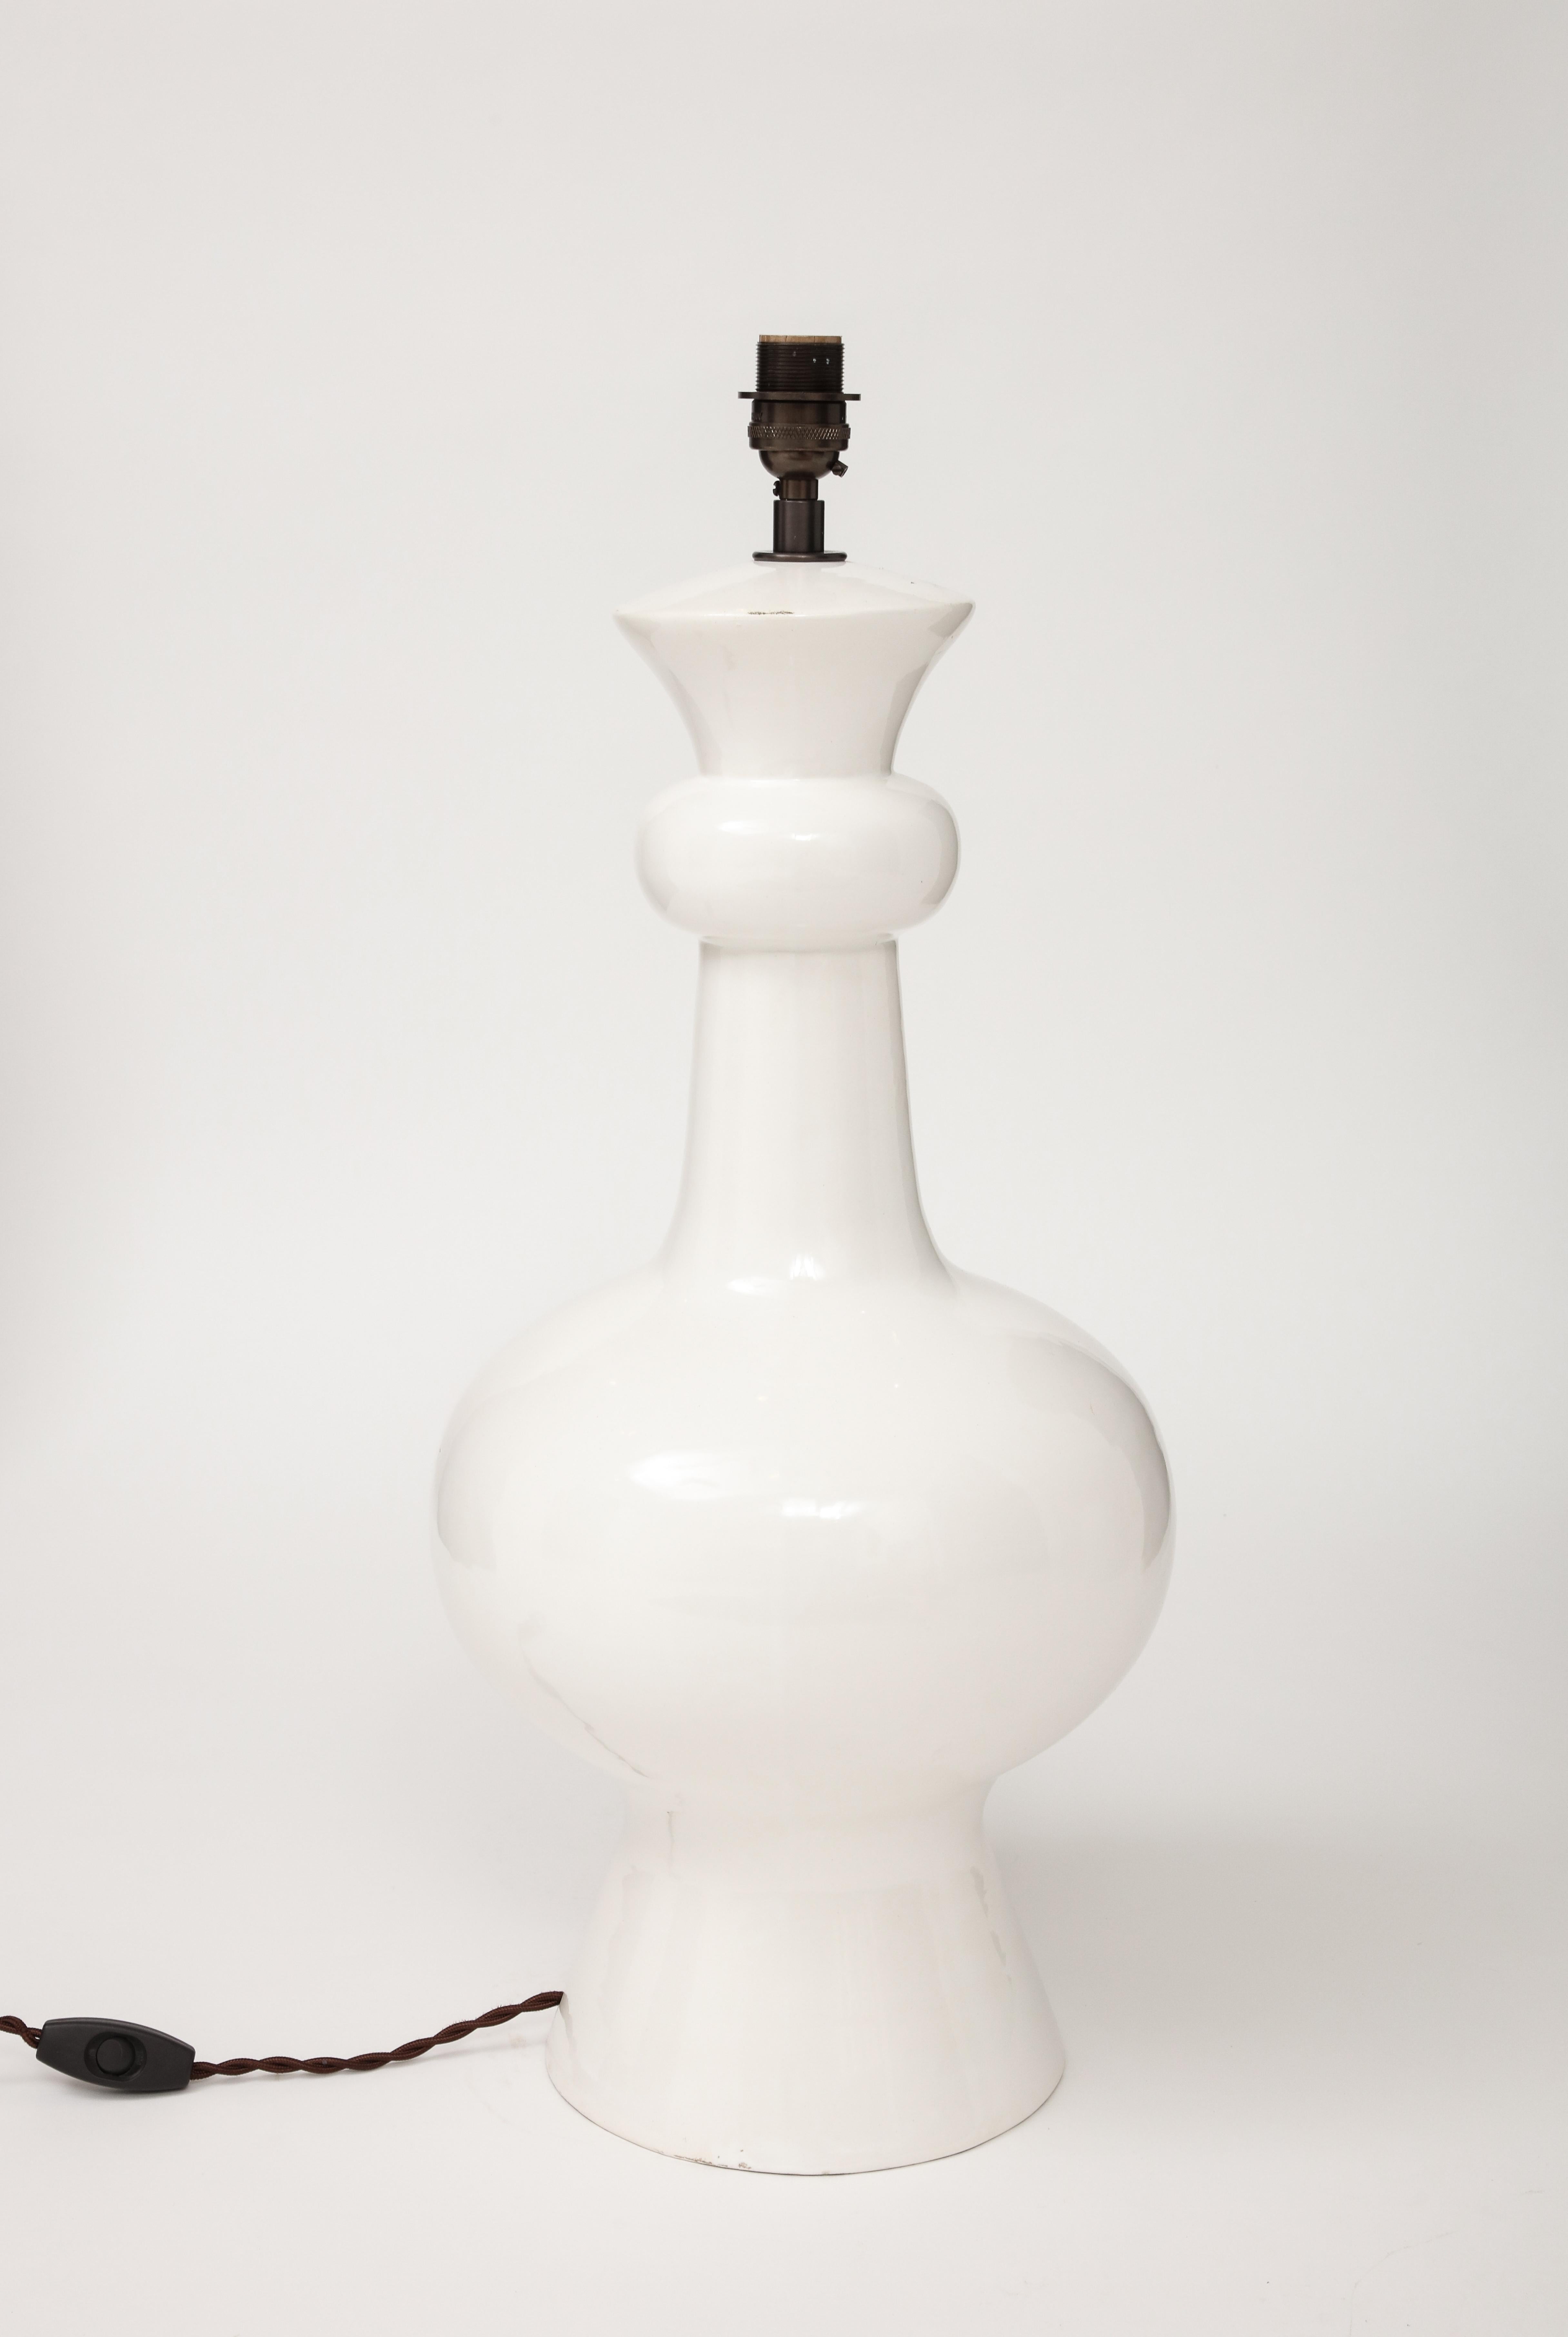 Large Scale Italian White Ceramic Lamp, 1960's For Sale 6